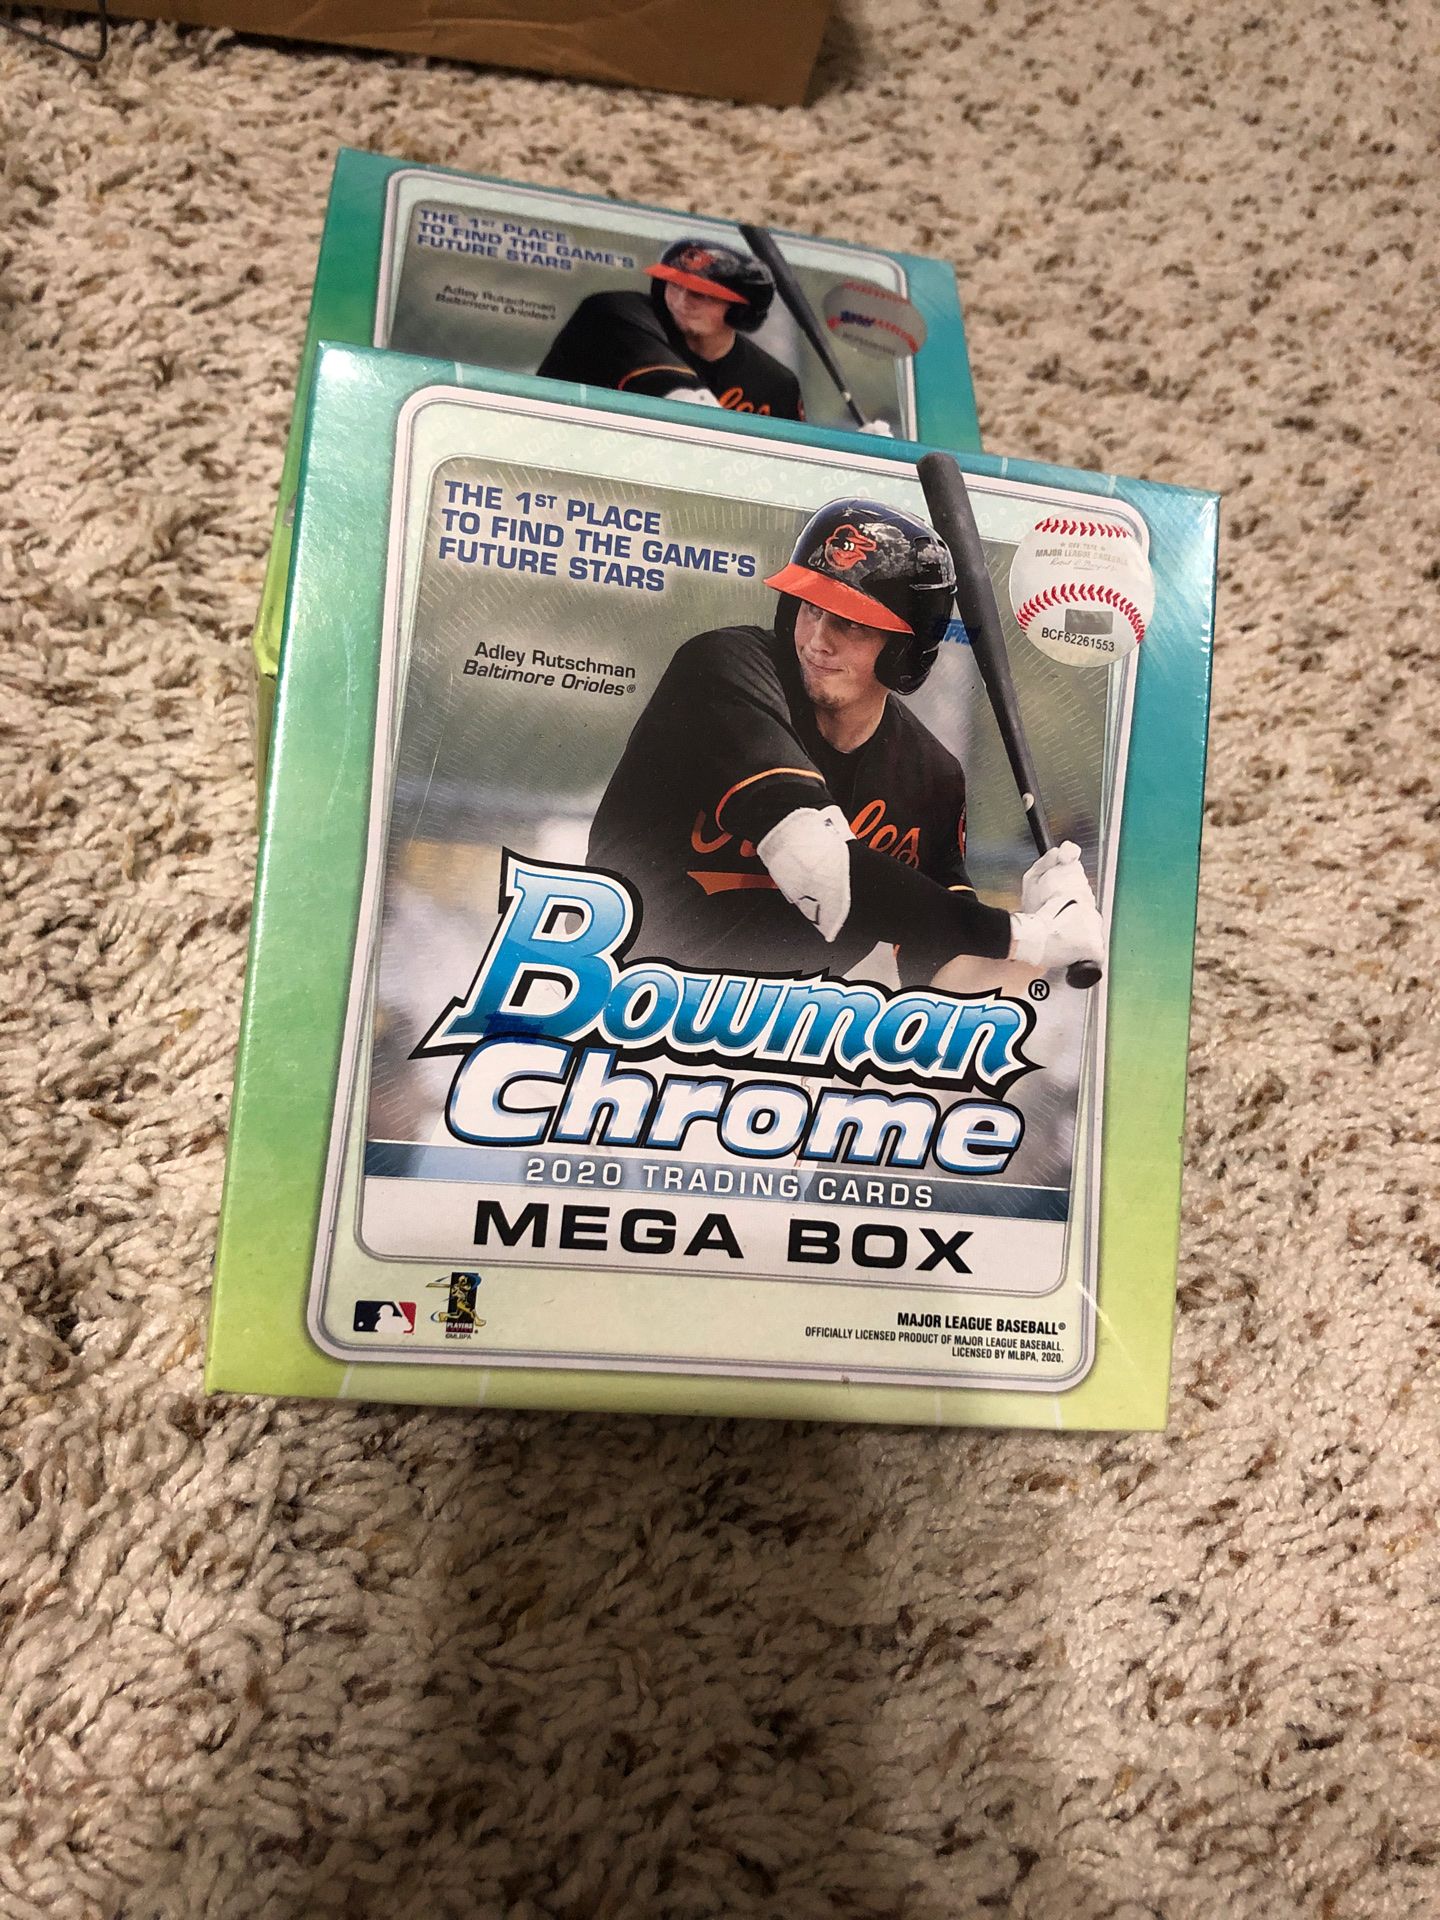 Lot of 5 2020 Topps Bowman Chrome Baseball MLB Mega Box Sports Cards Brand New Sealed